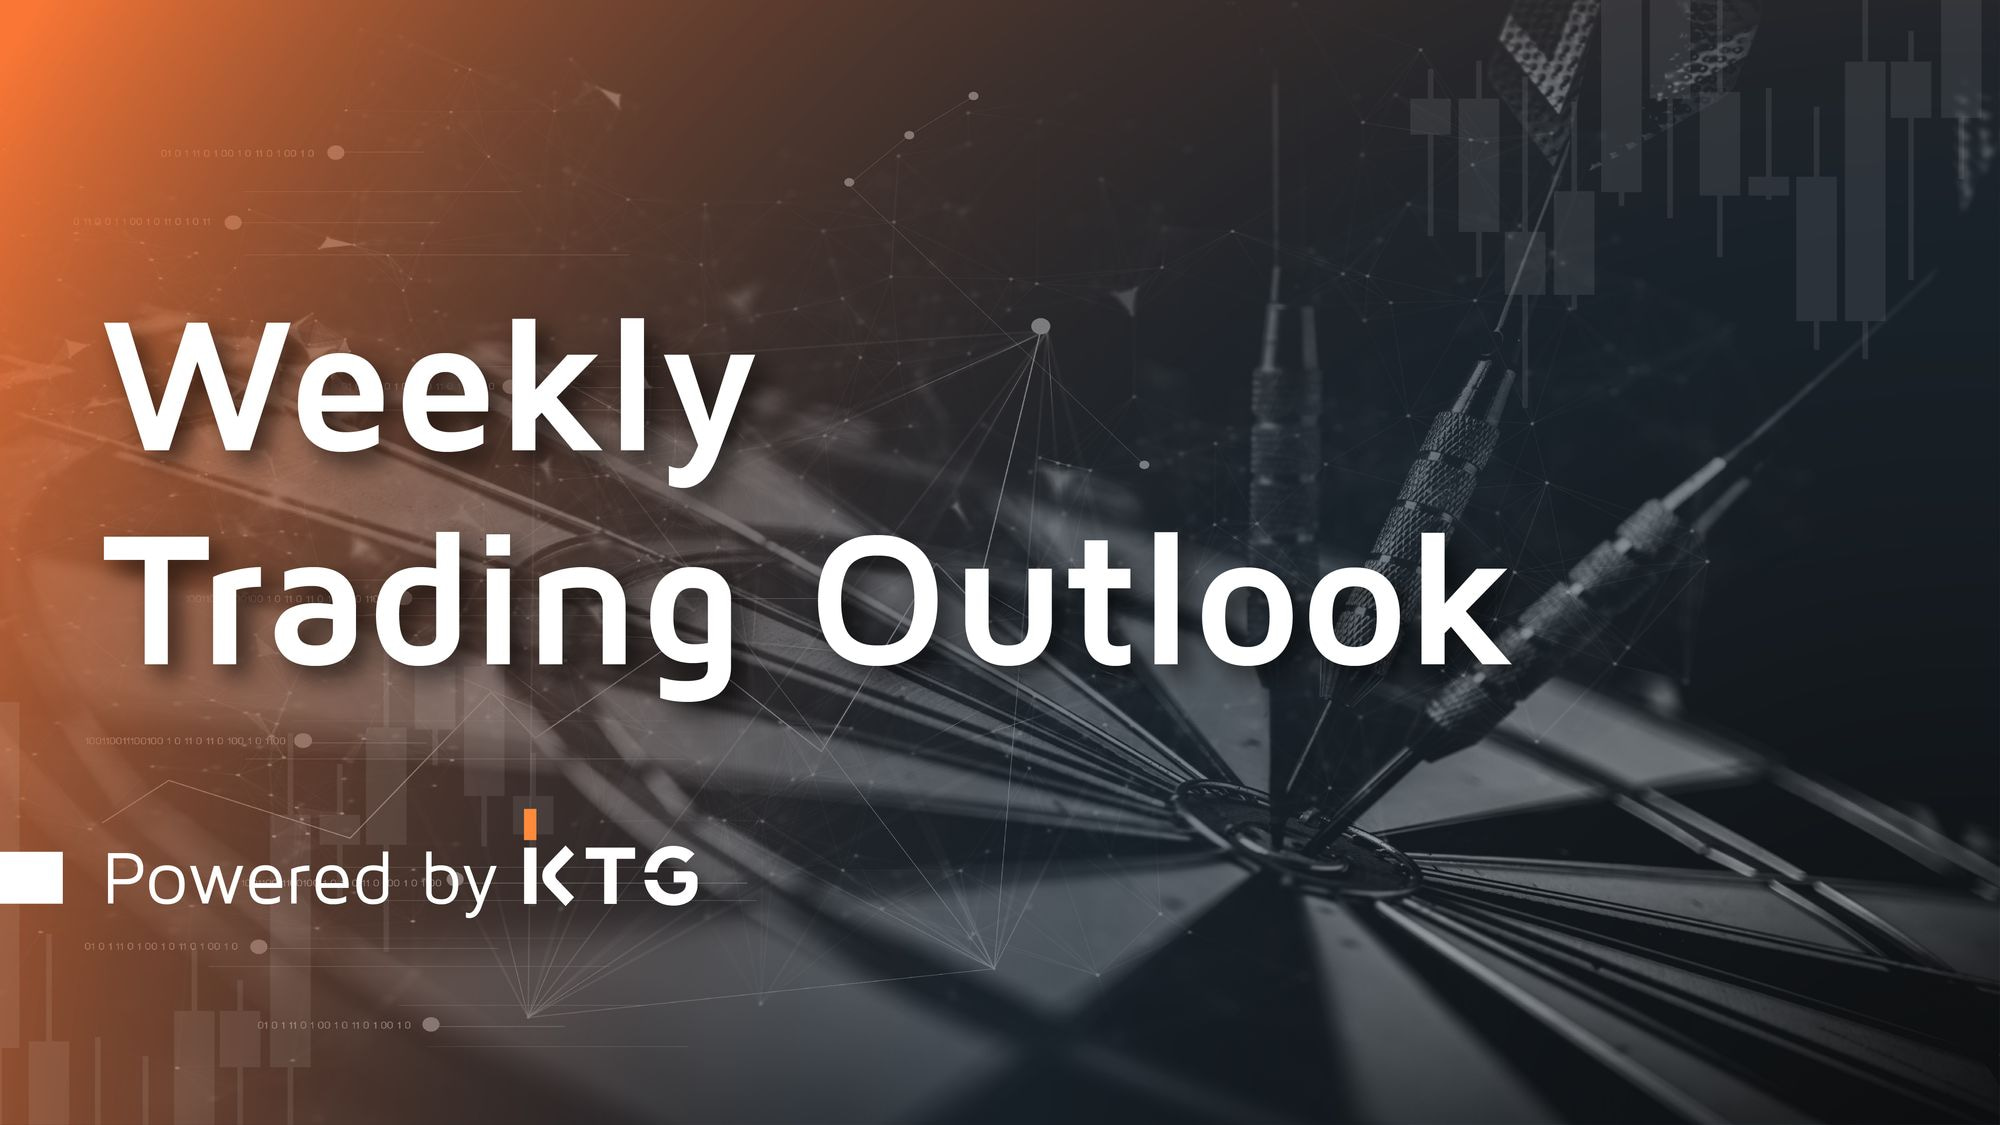 A sign of bearish weeks ahead? #TradingOutlook - Powered by KTG